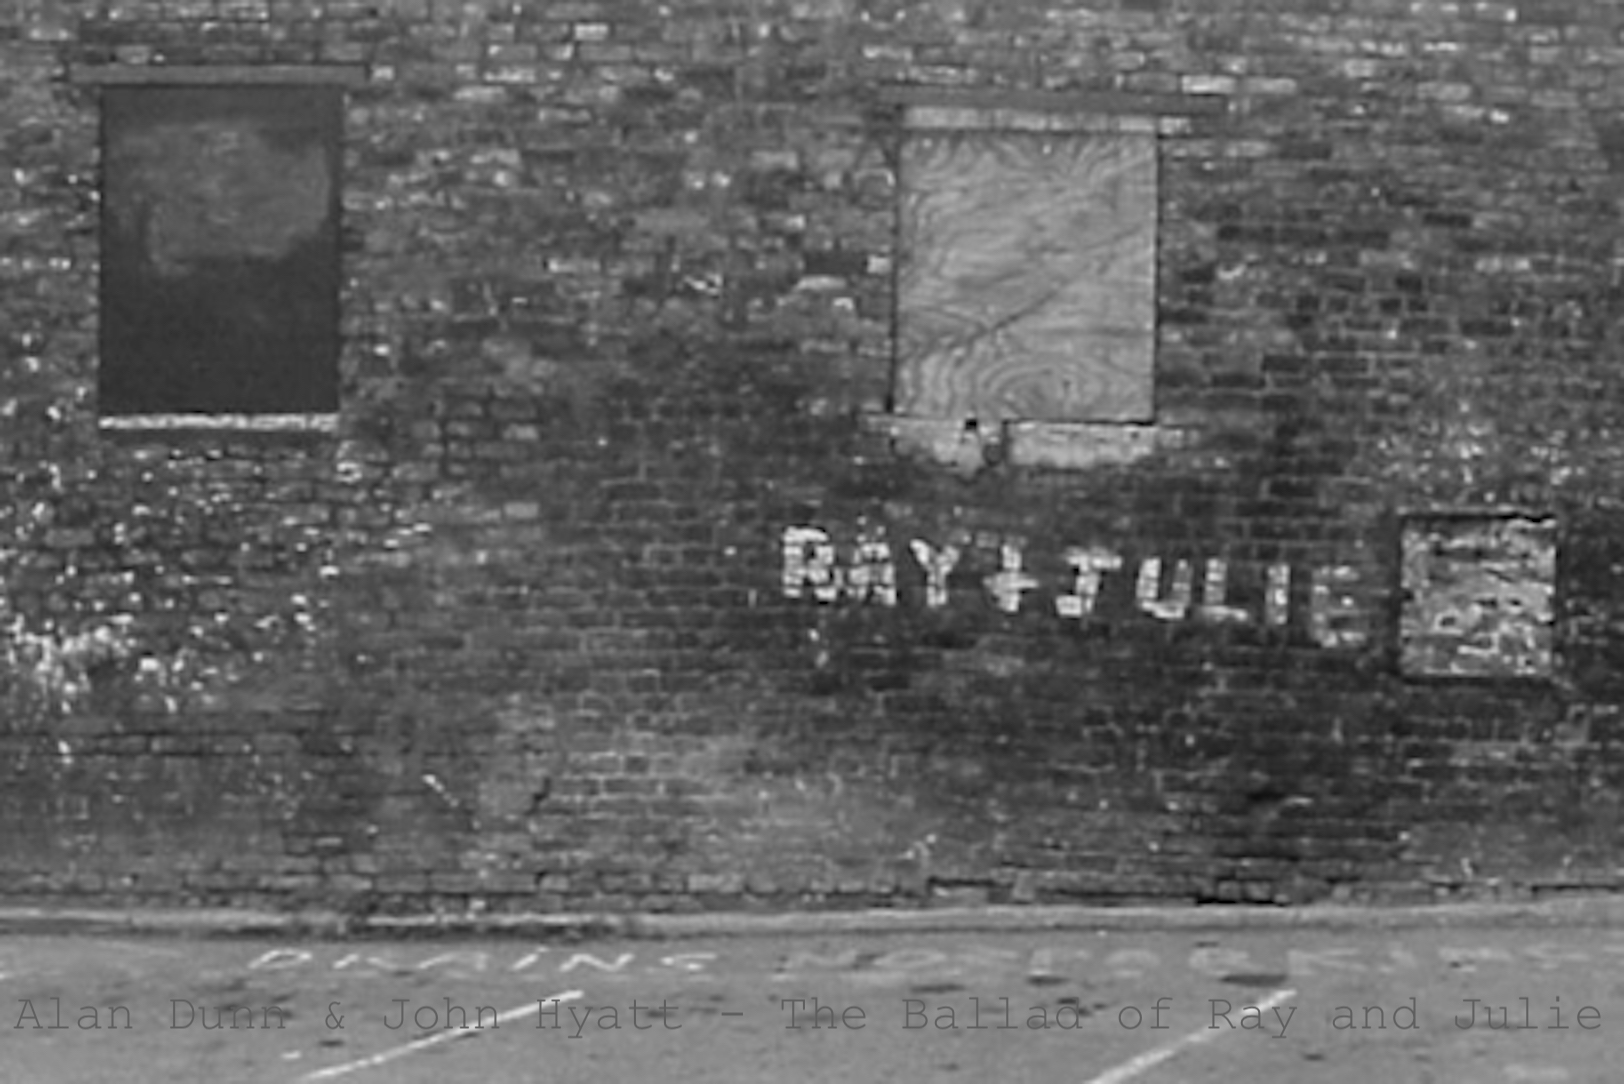 Alan Dunn & John Hyatt – The Ballad of Ray and Julie